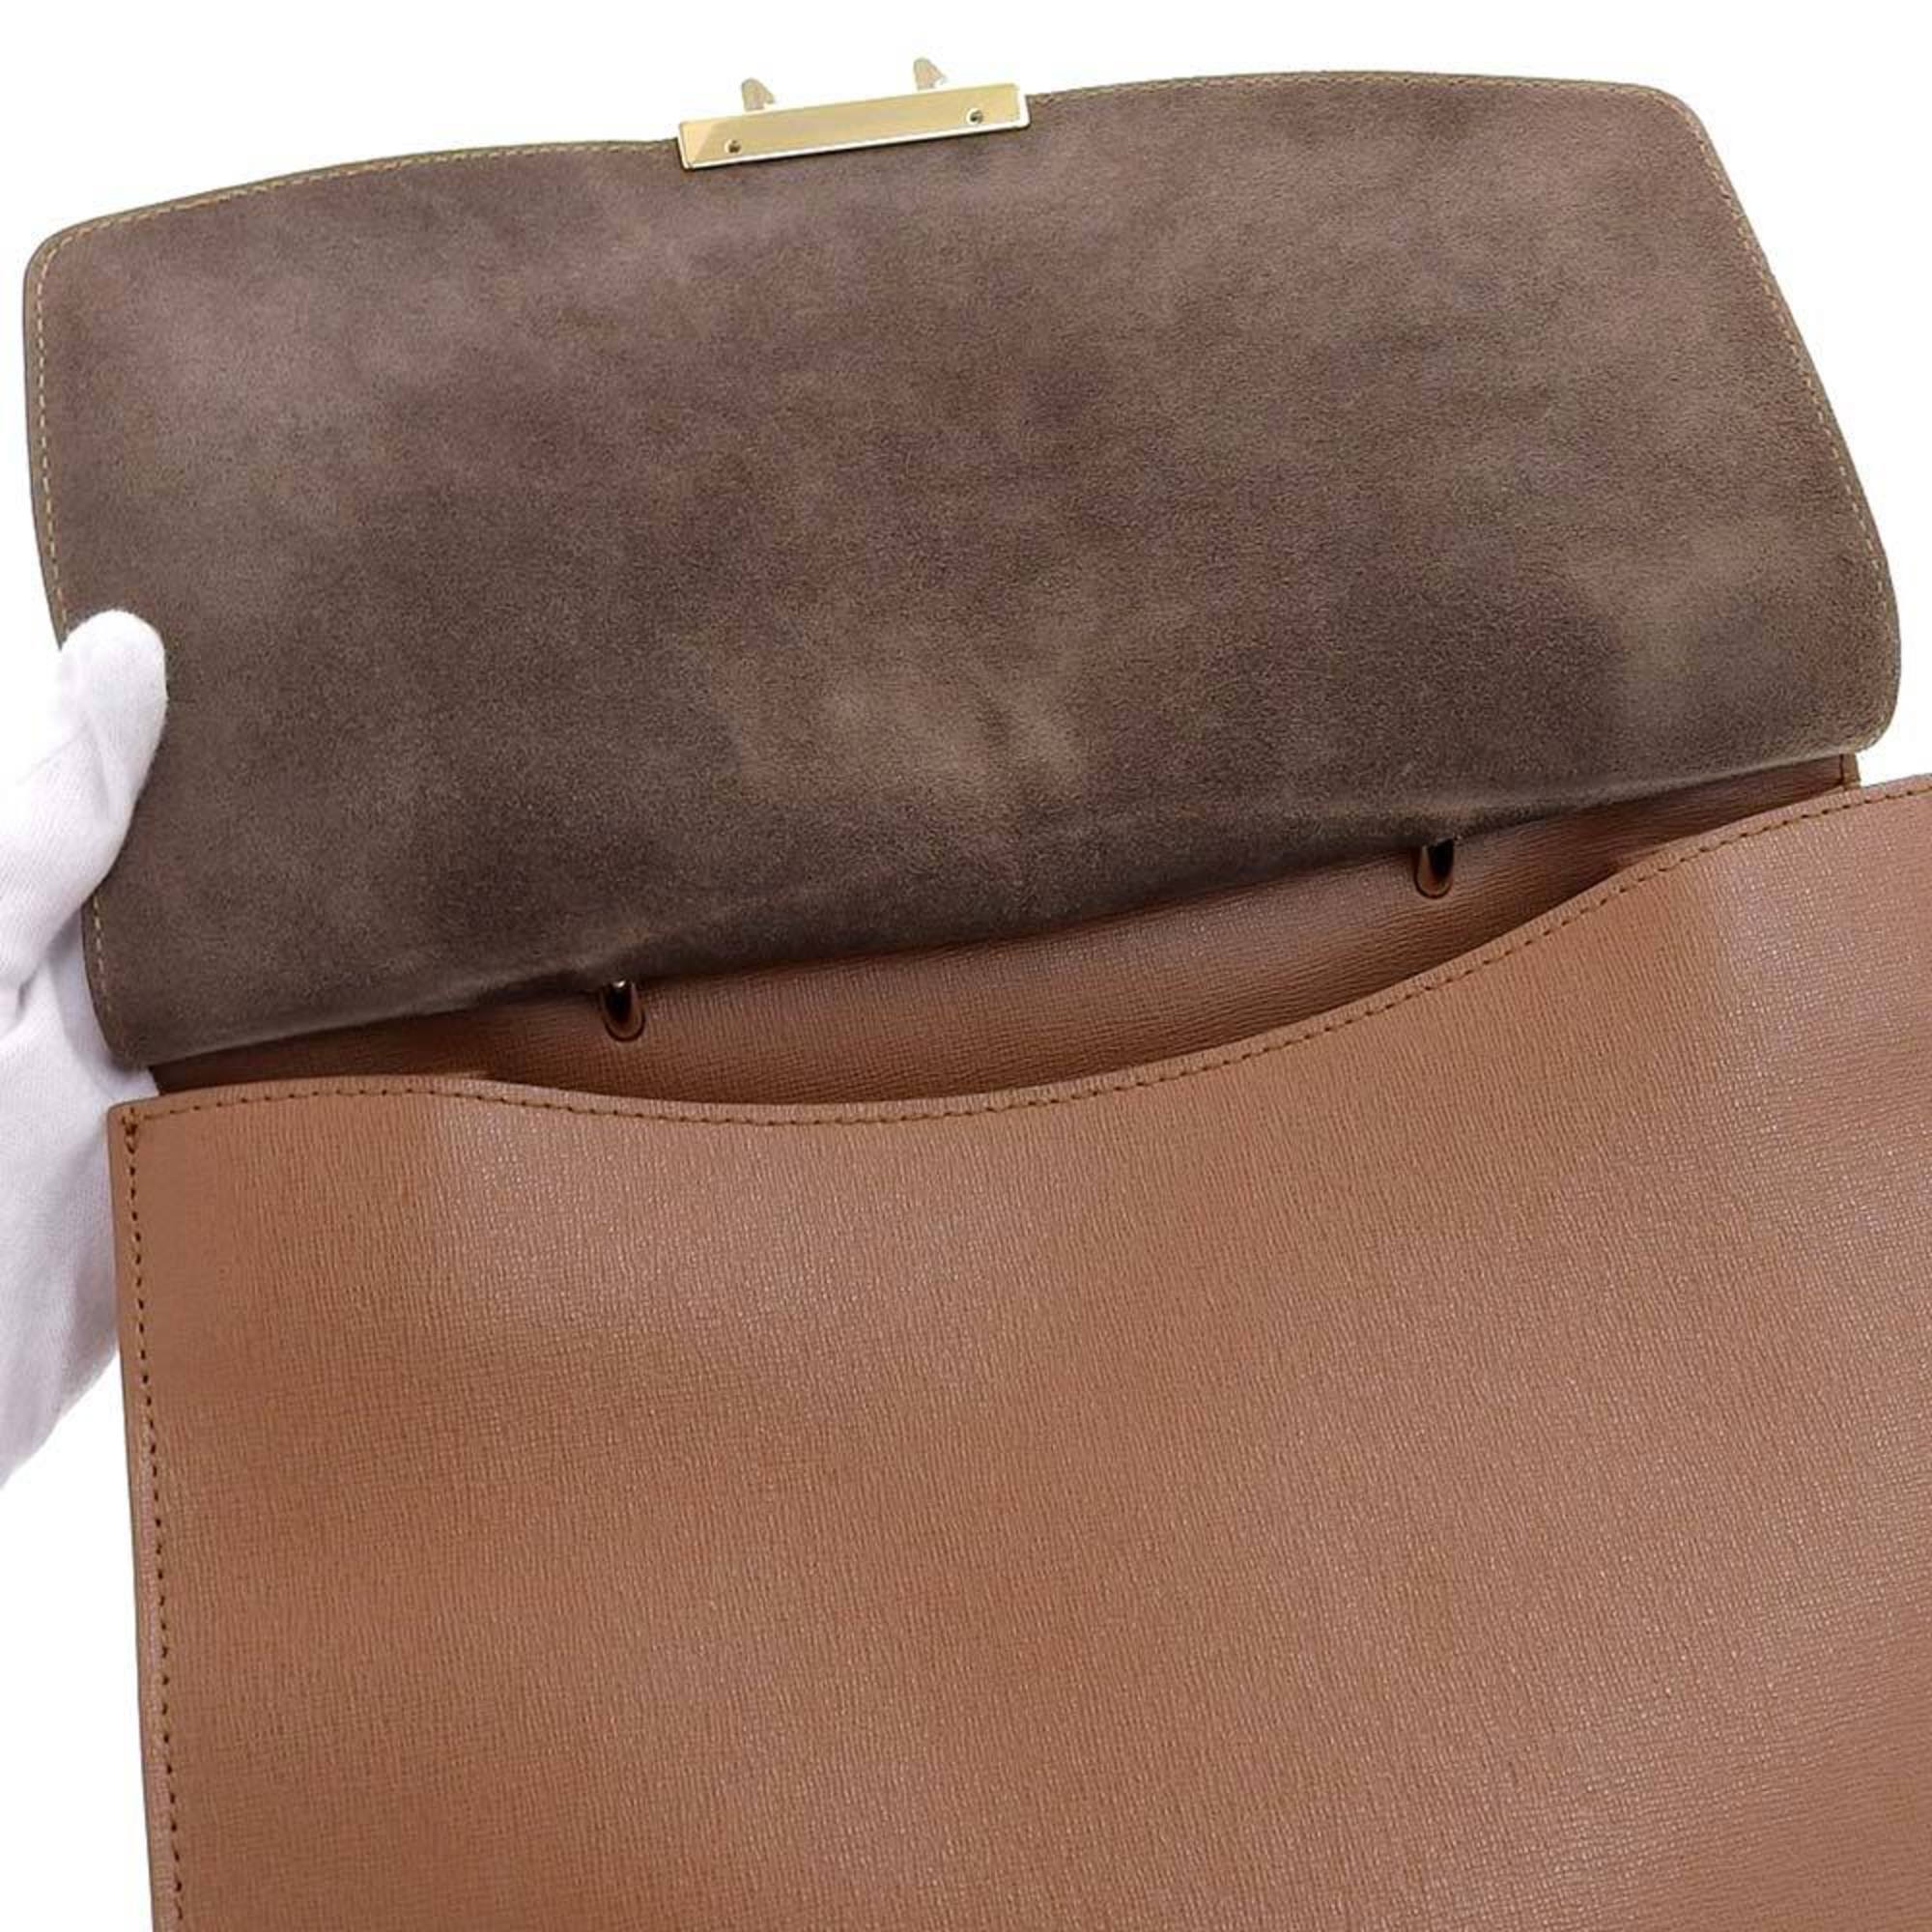 Furla FURLA Julia M Top Handle 2WAY Bag Handbag One Shoulder Leather Brown F6801